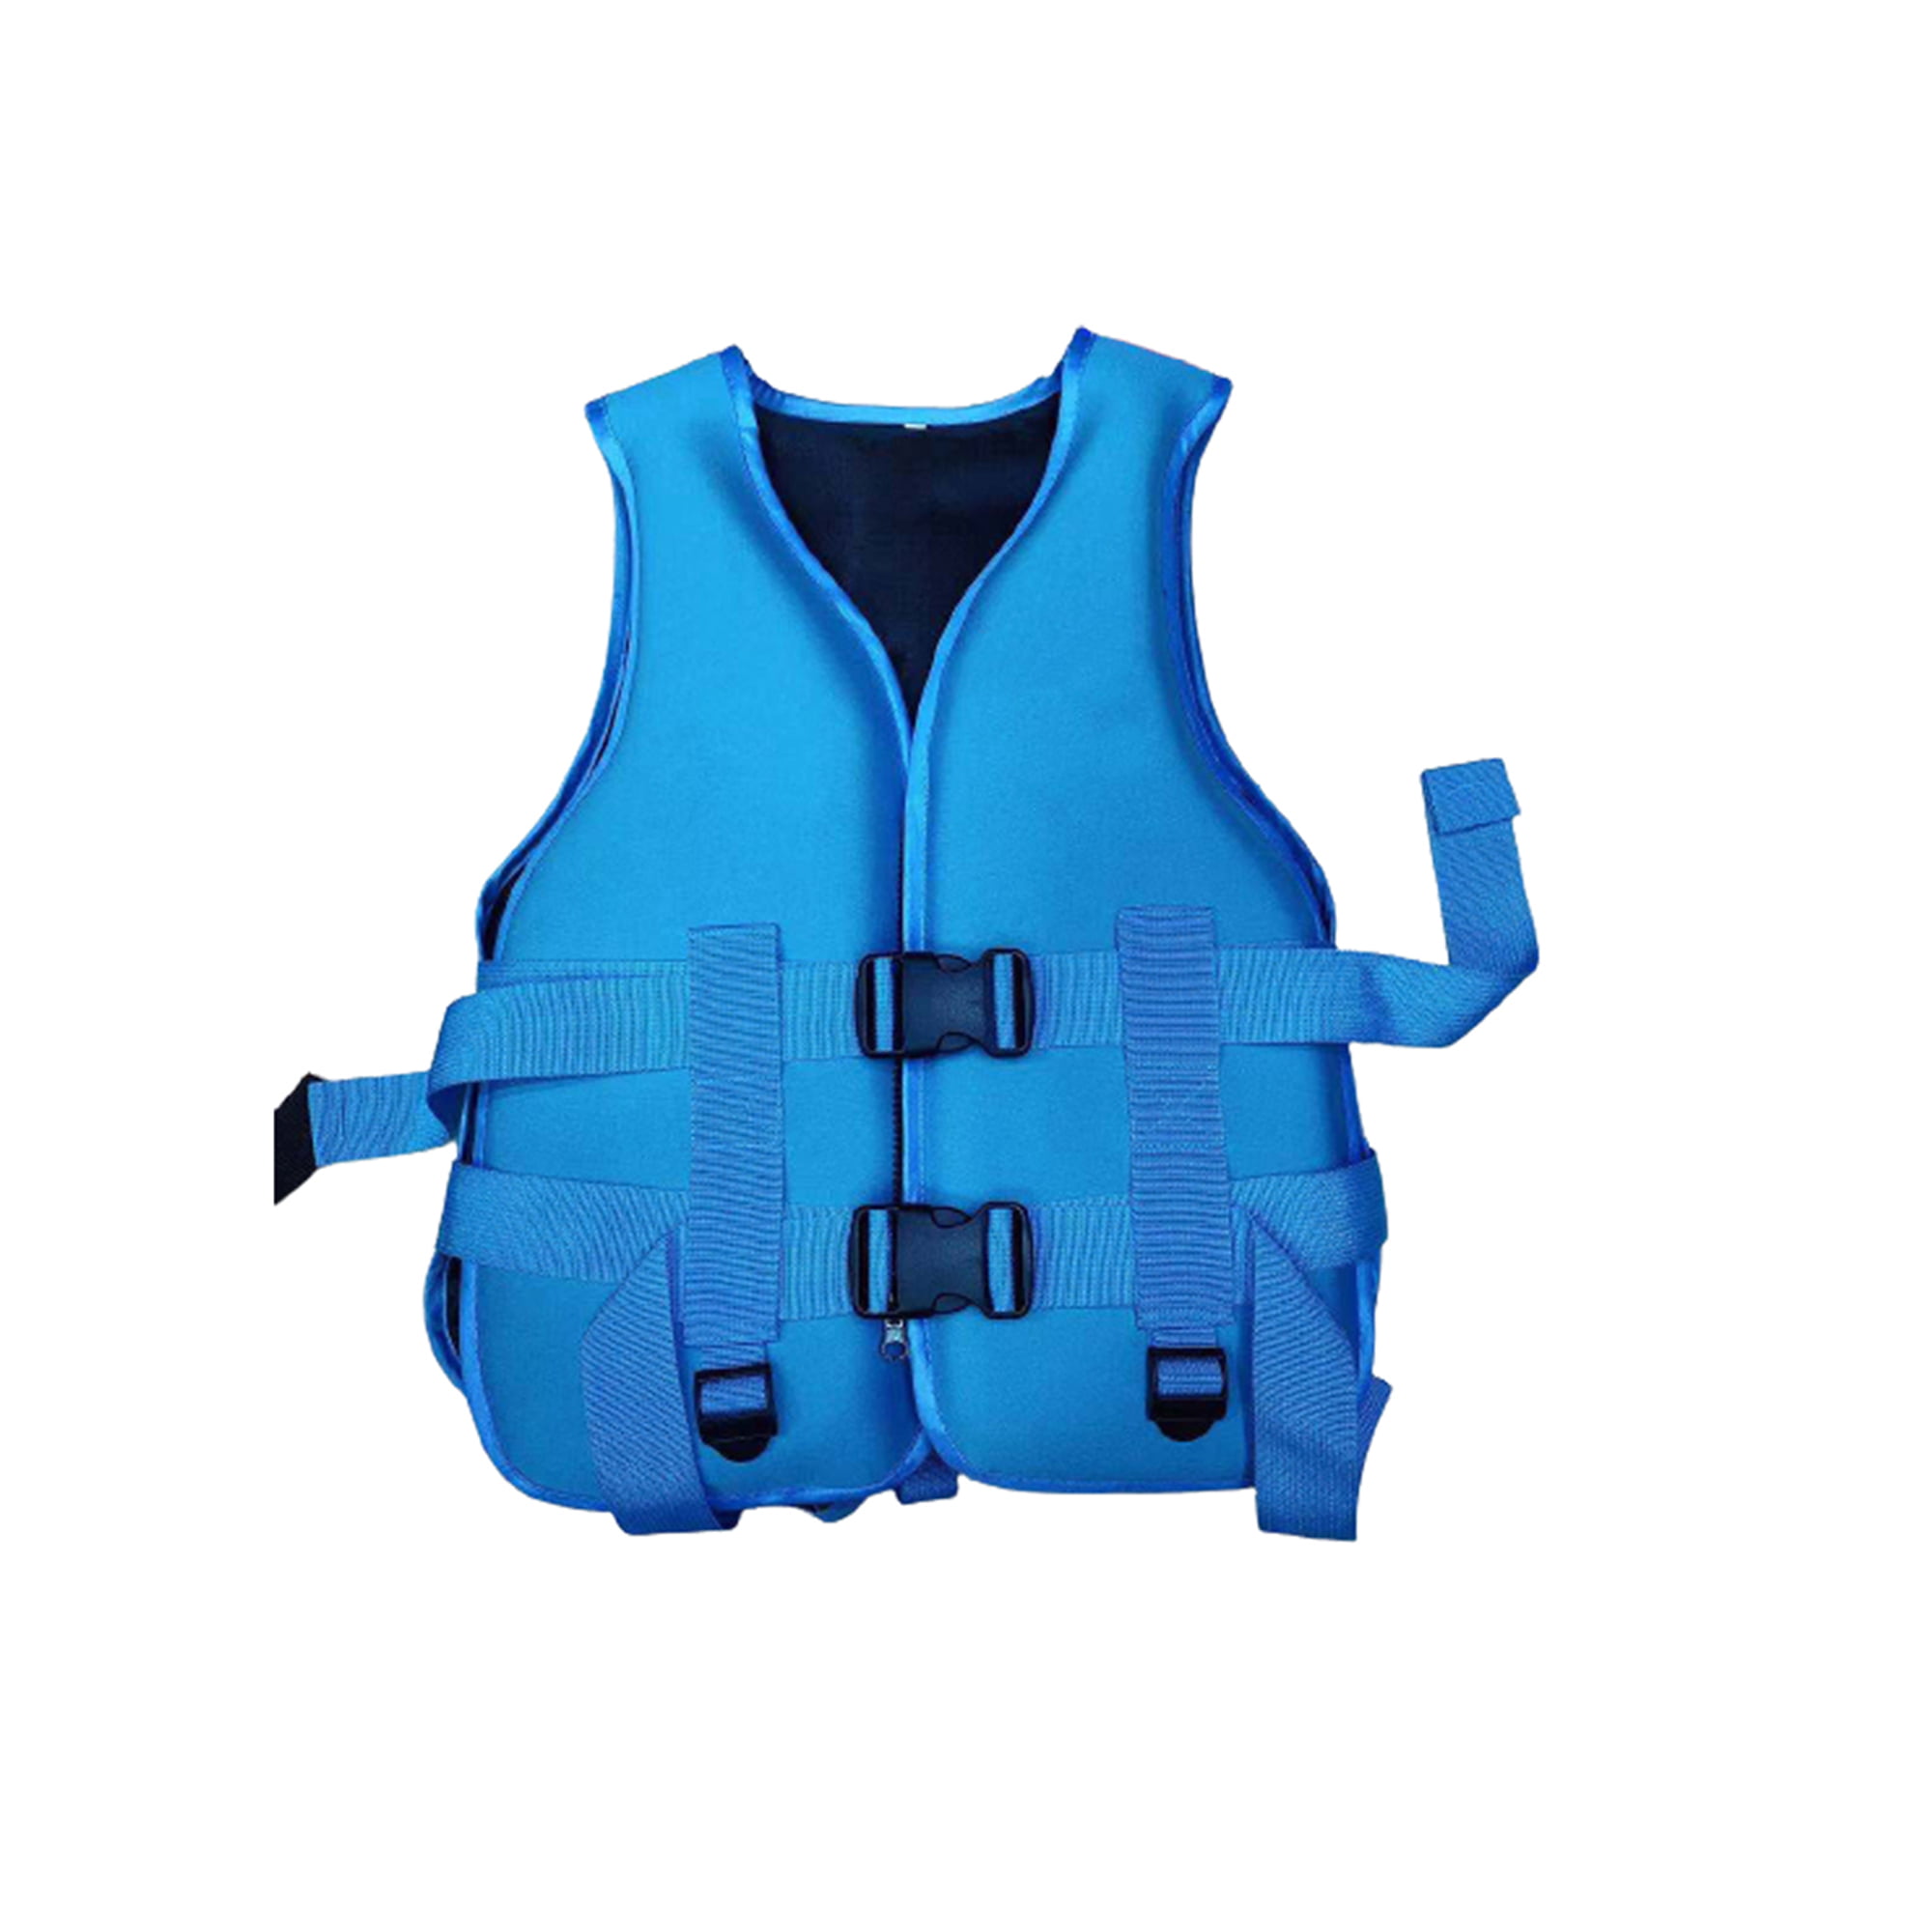 Details about   Men Women Neoprene Buoyancy Life Jacket Floating Surfing Protective Life Vest 